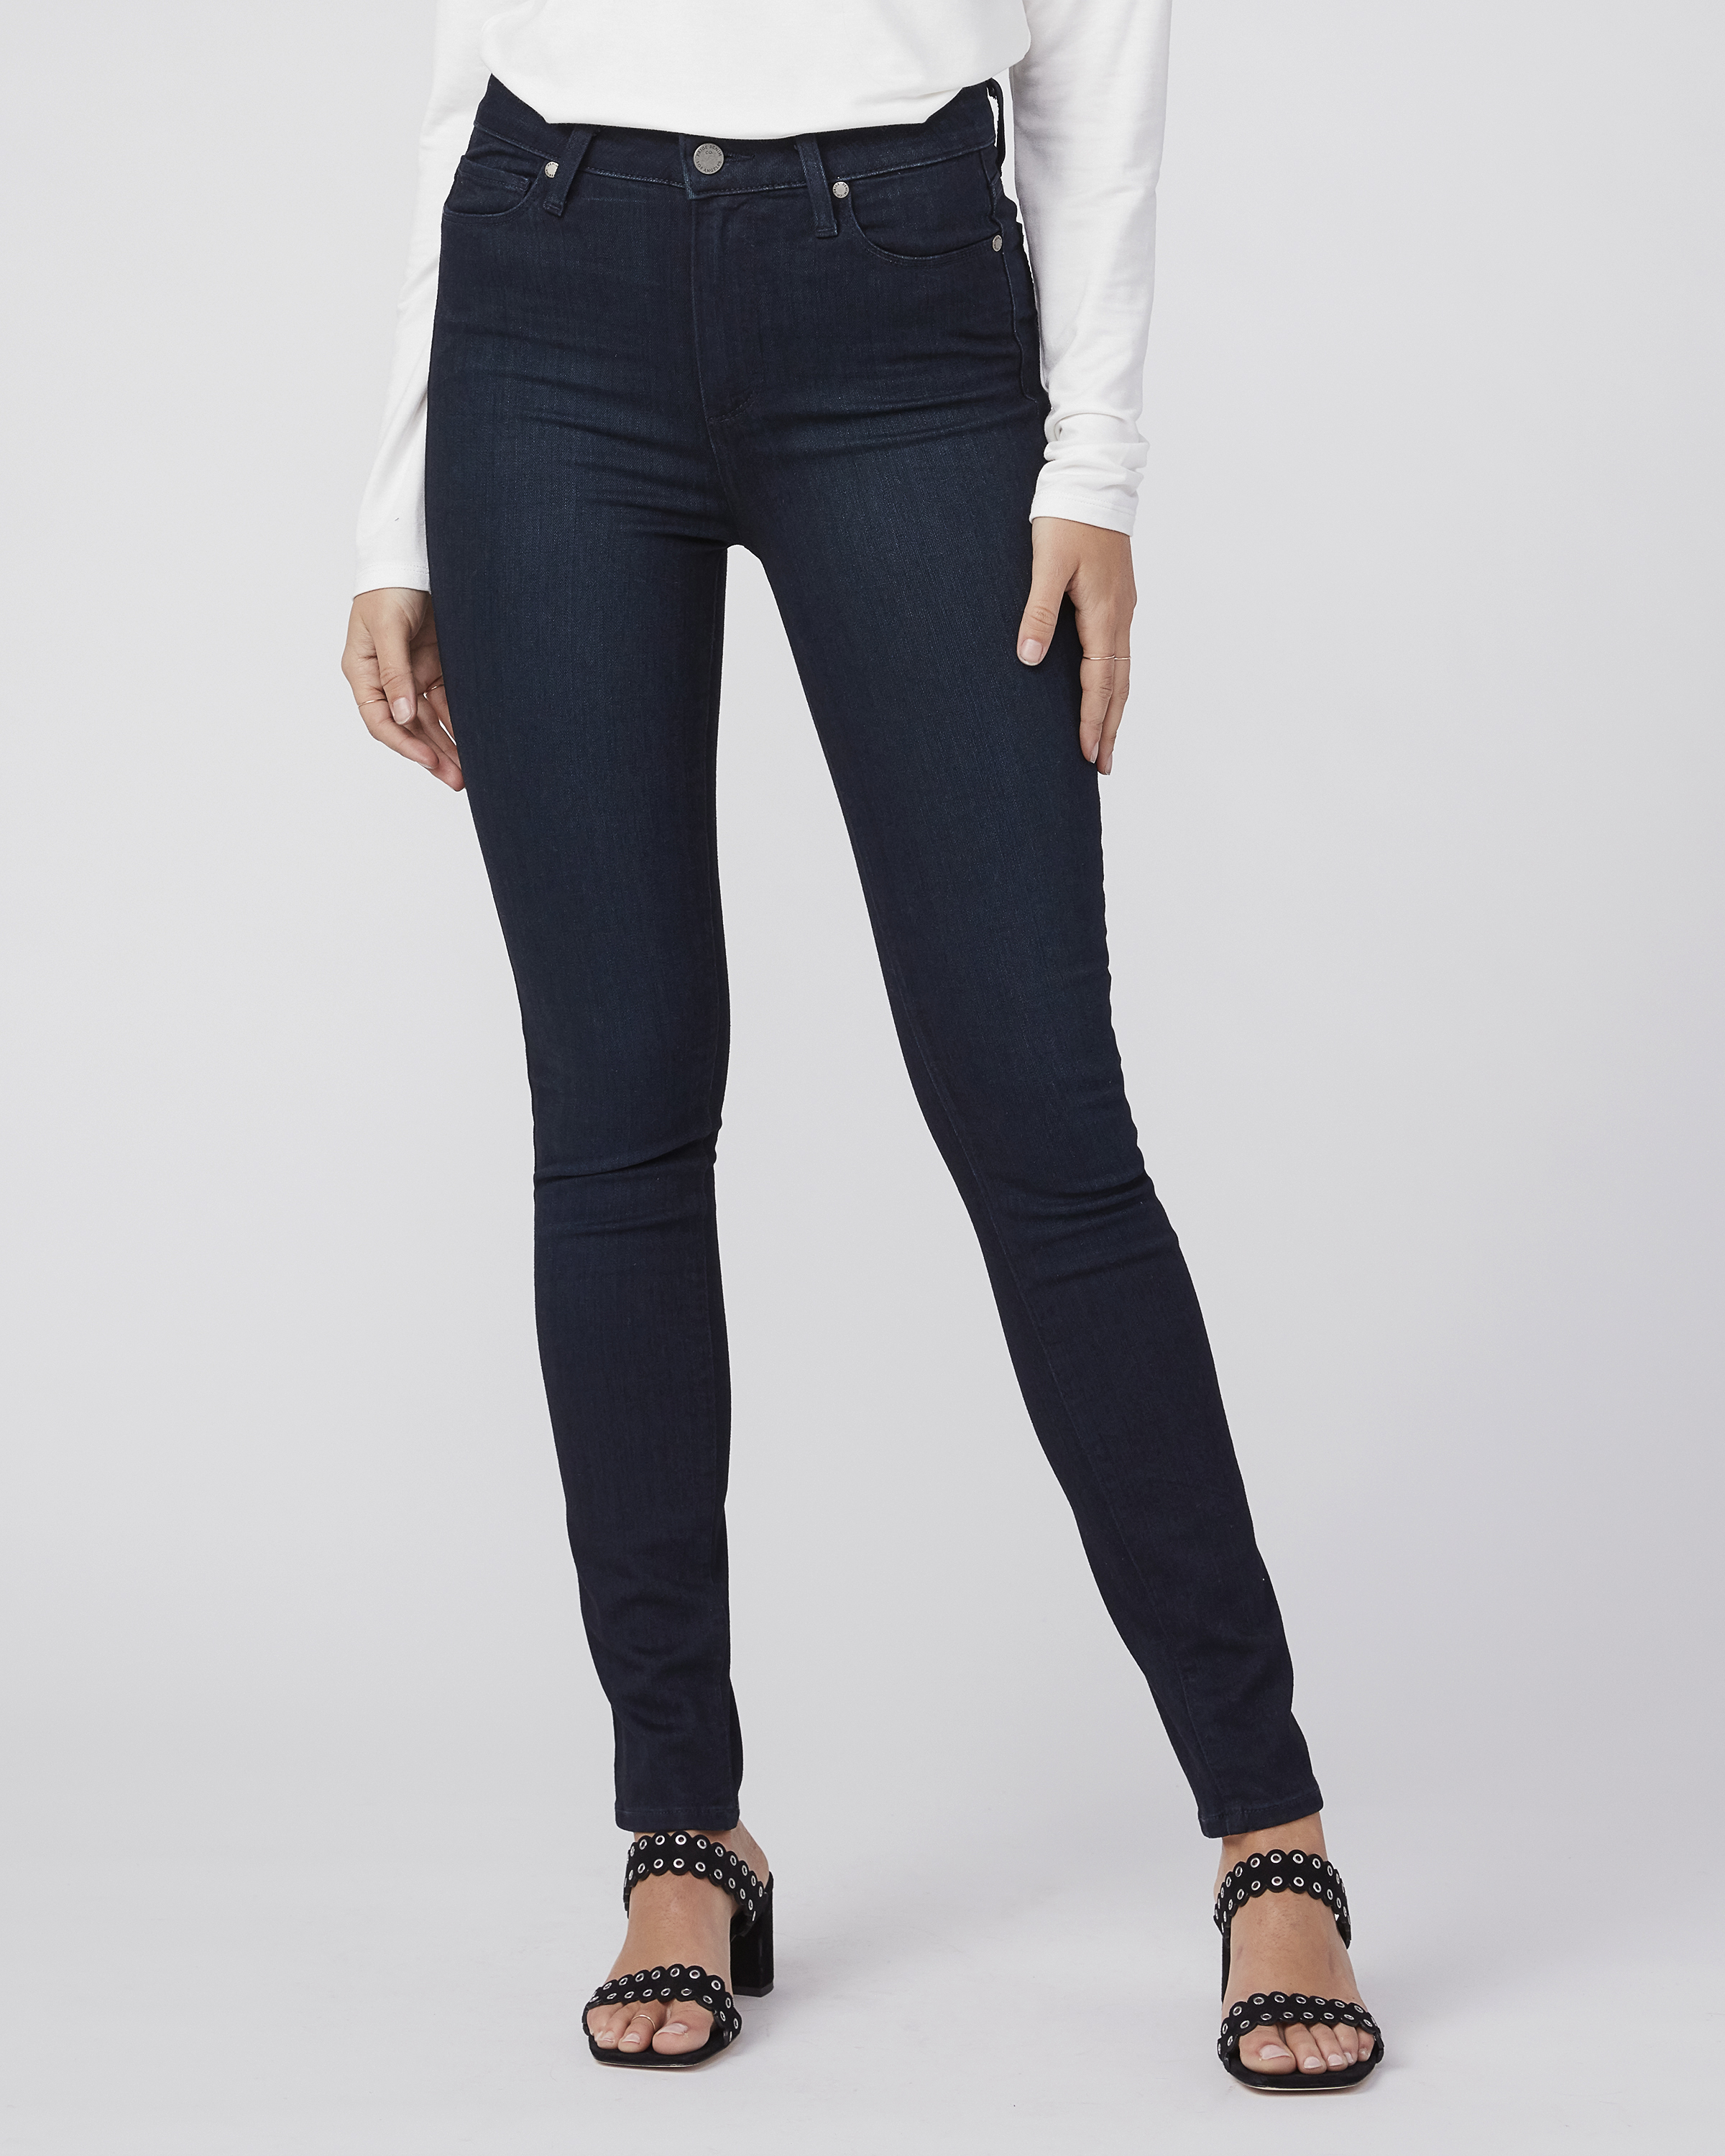 PAIGE® | Premium Denim Jeans and Apparel